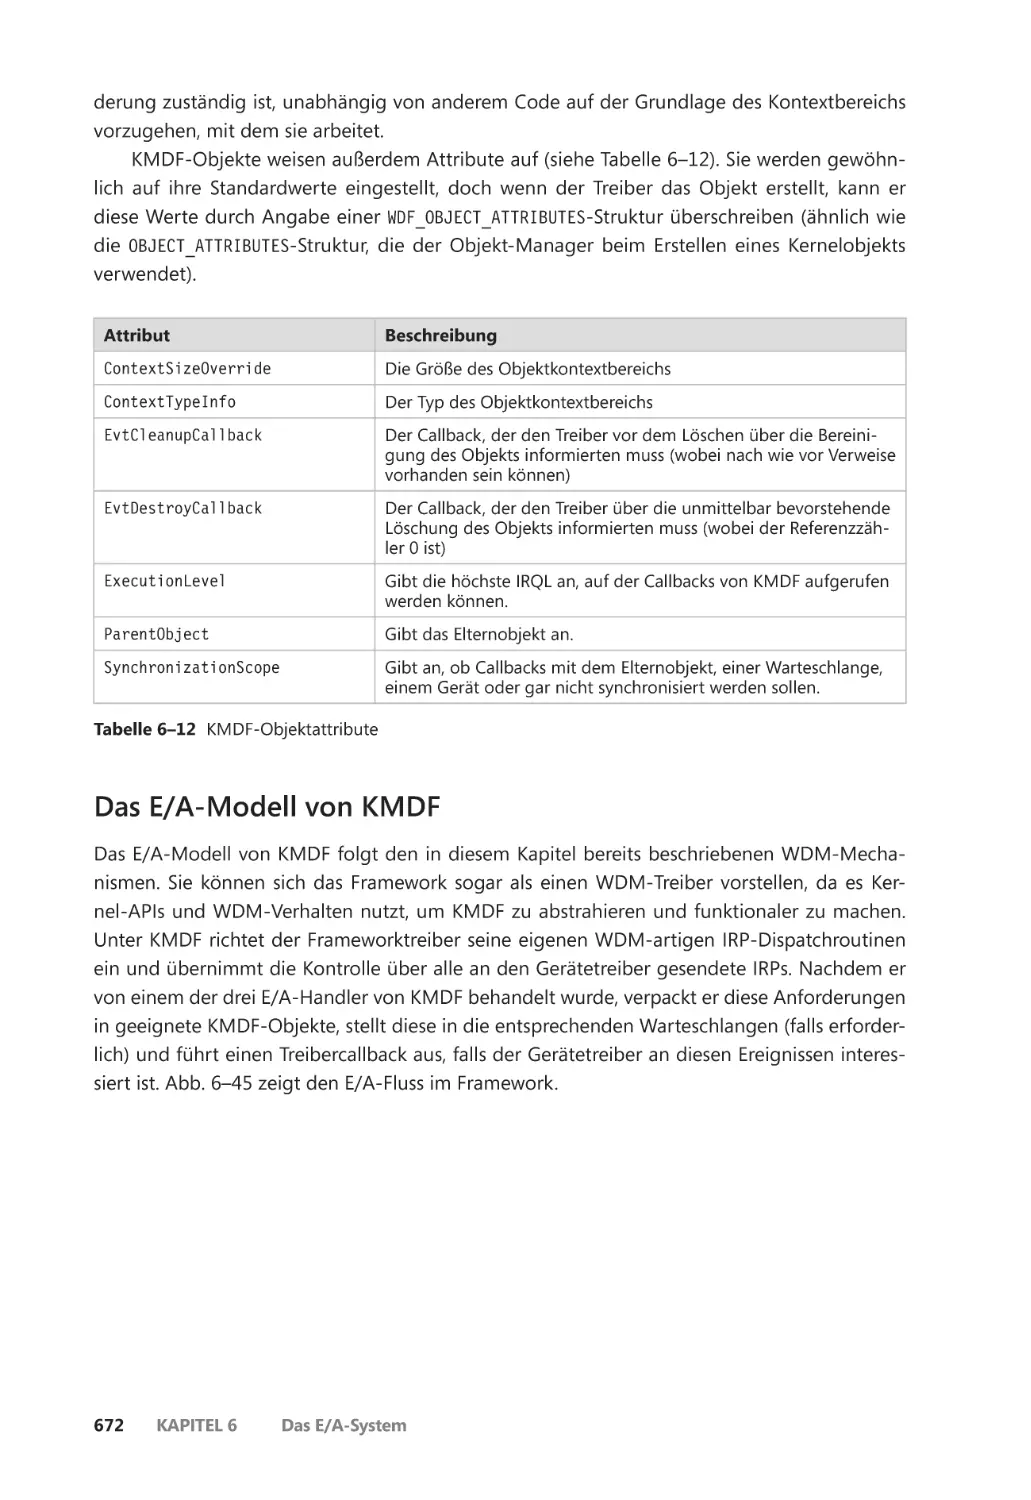 Das E/A-Modell von KMDF